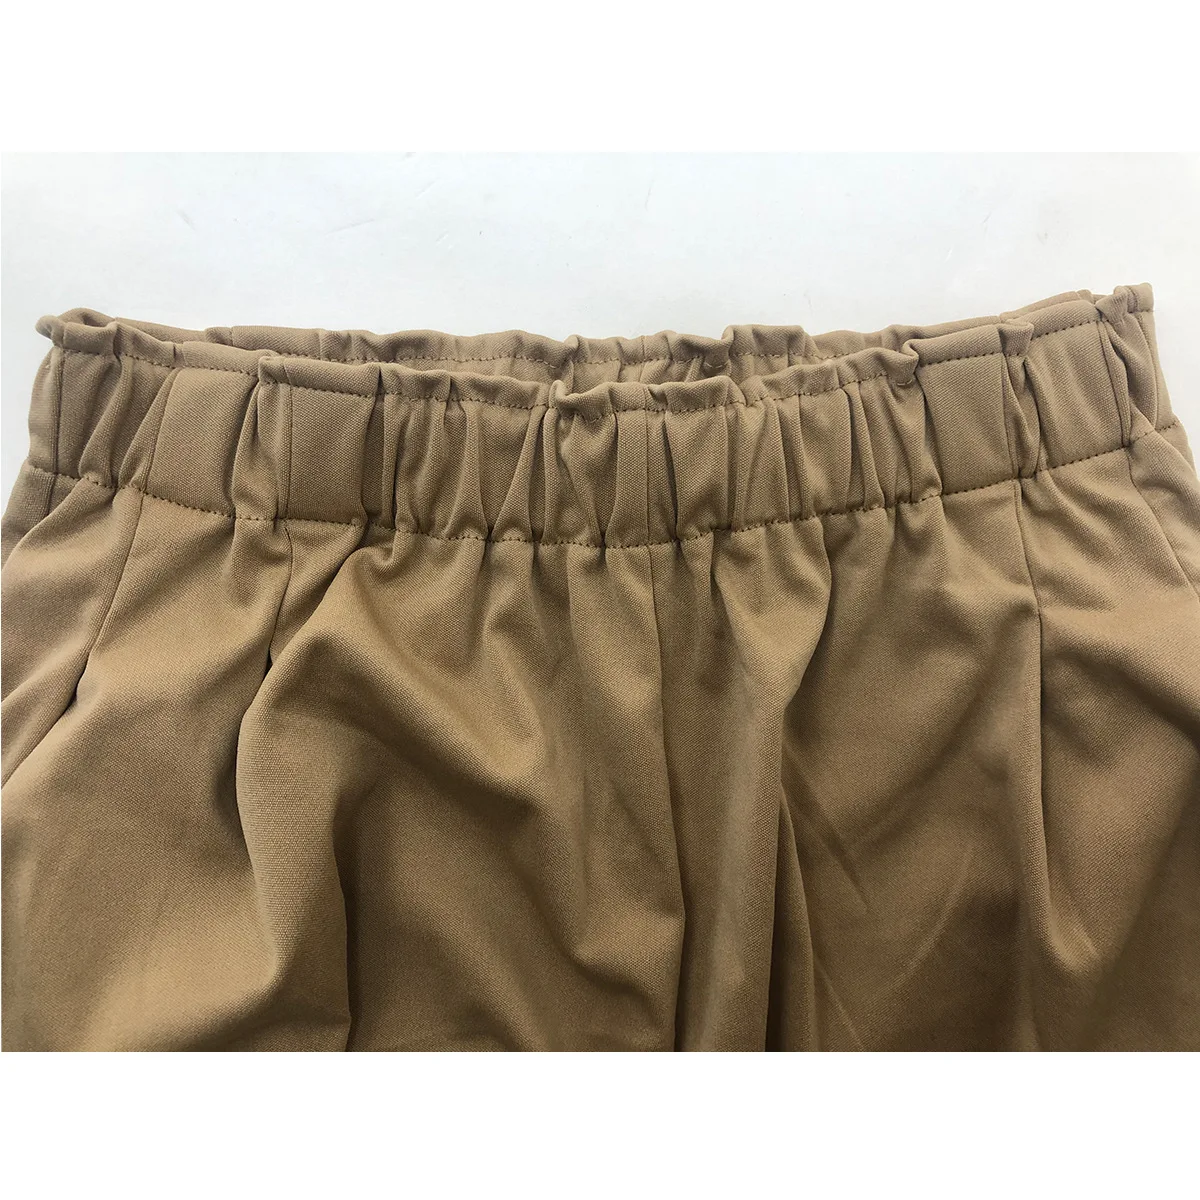 nike pro shorts RMSFE 2021 Women Solid Color Elastic Belt Pocket Fashion Loose Capri Pants Middle Pants Casual Pants Shorts gymshark shorts